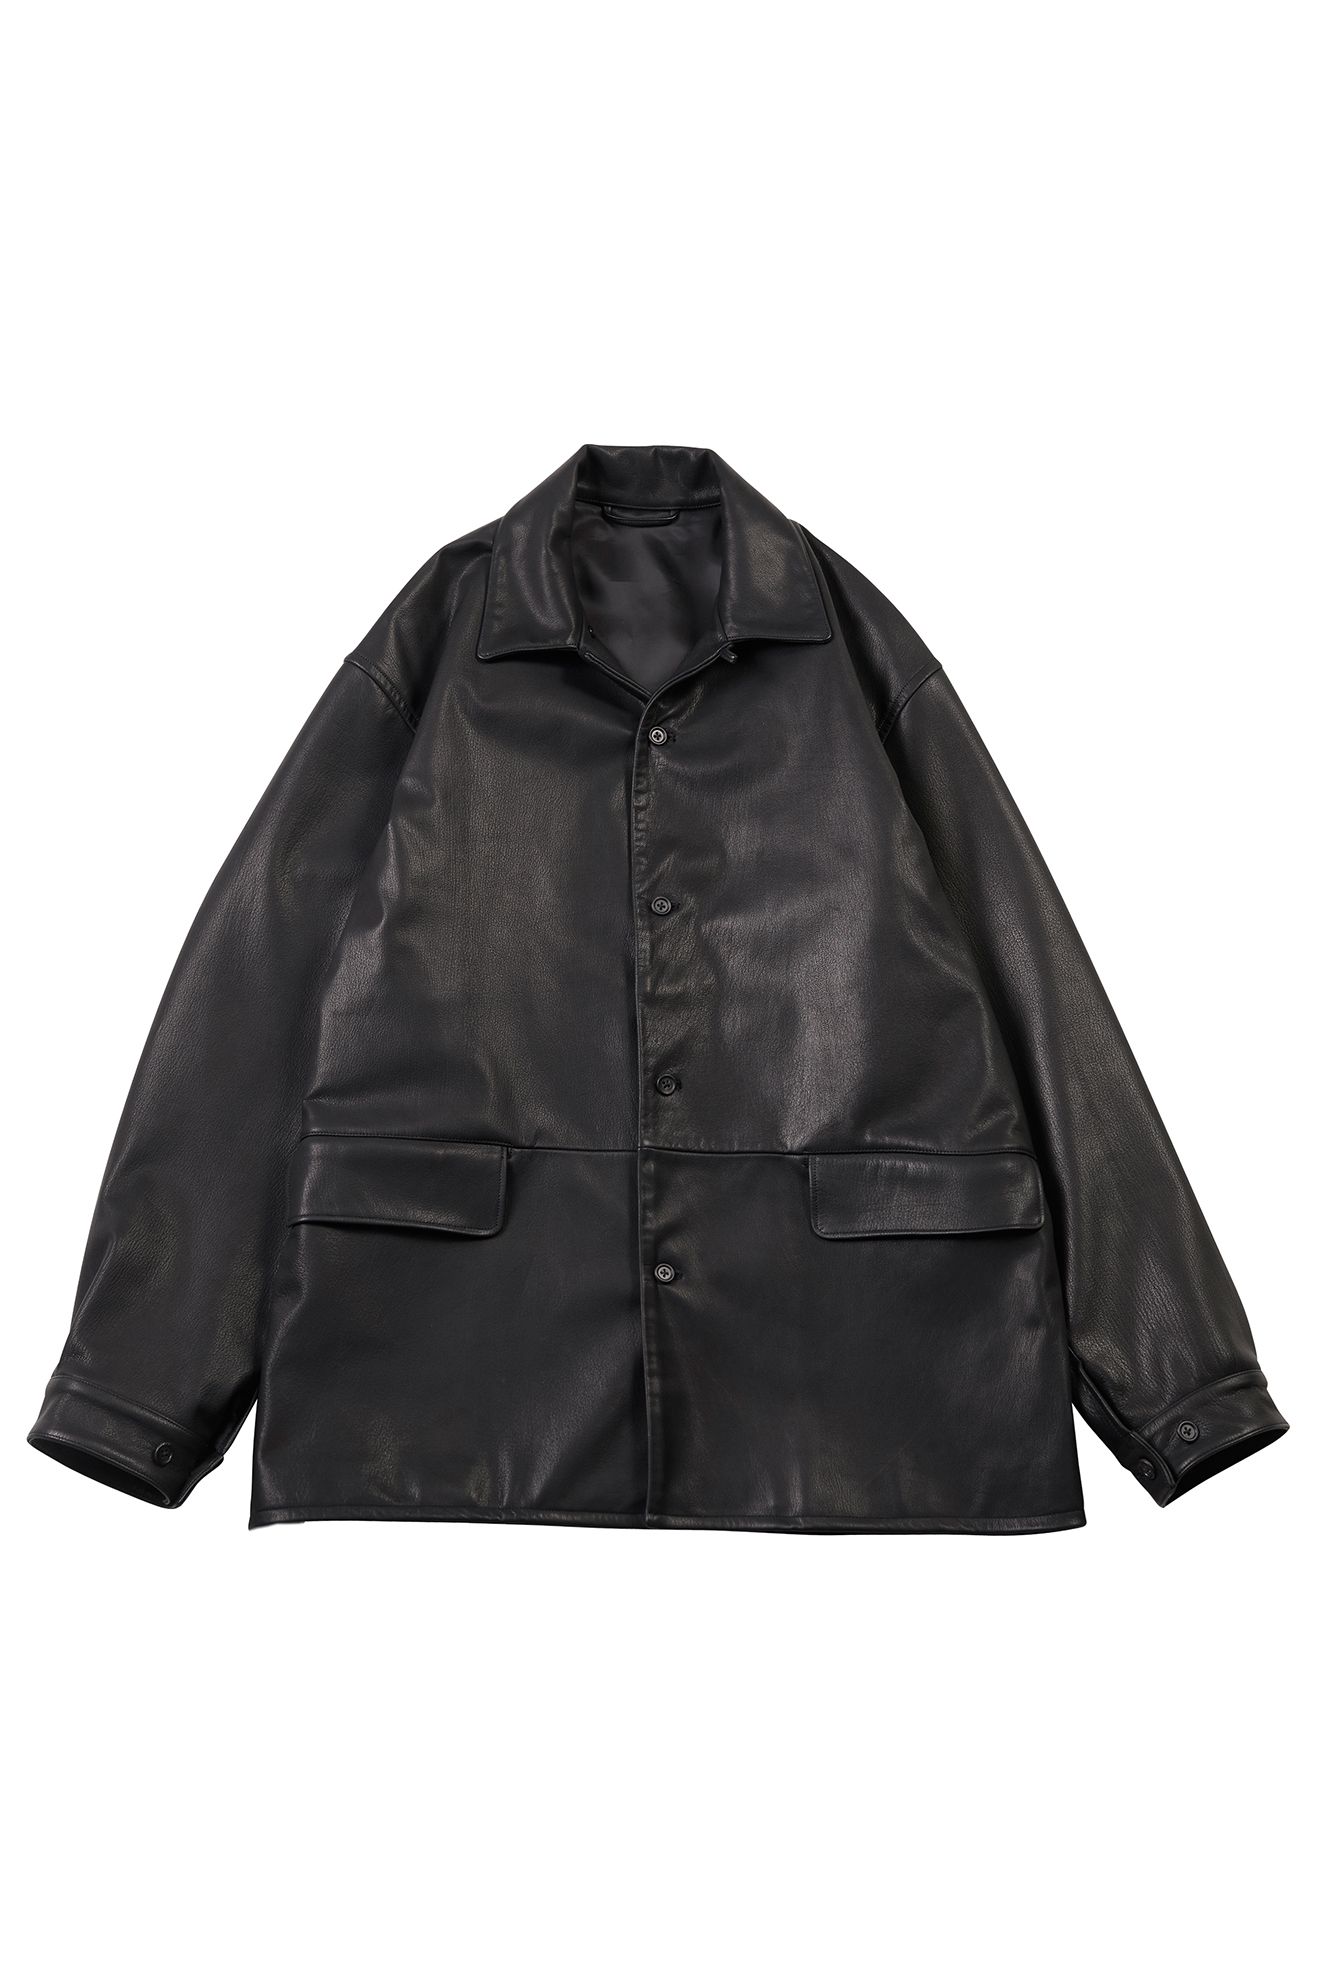 blurhms / Goat Leather Jacket